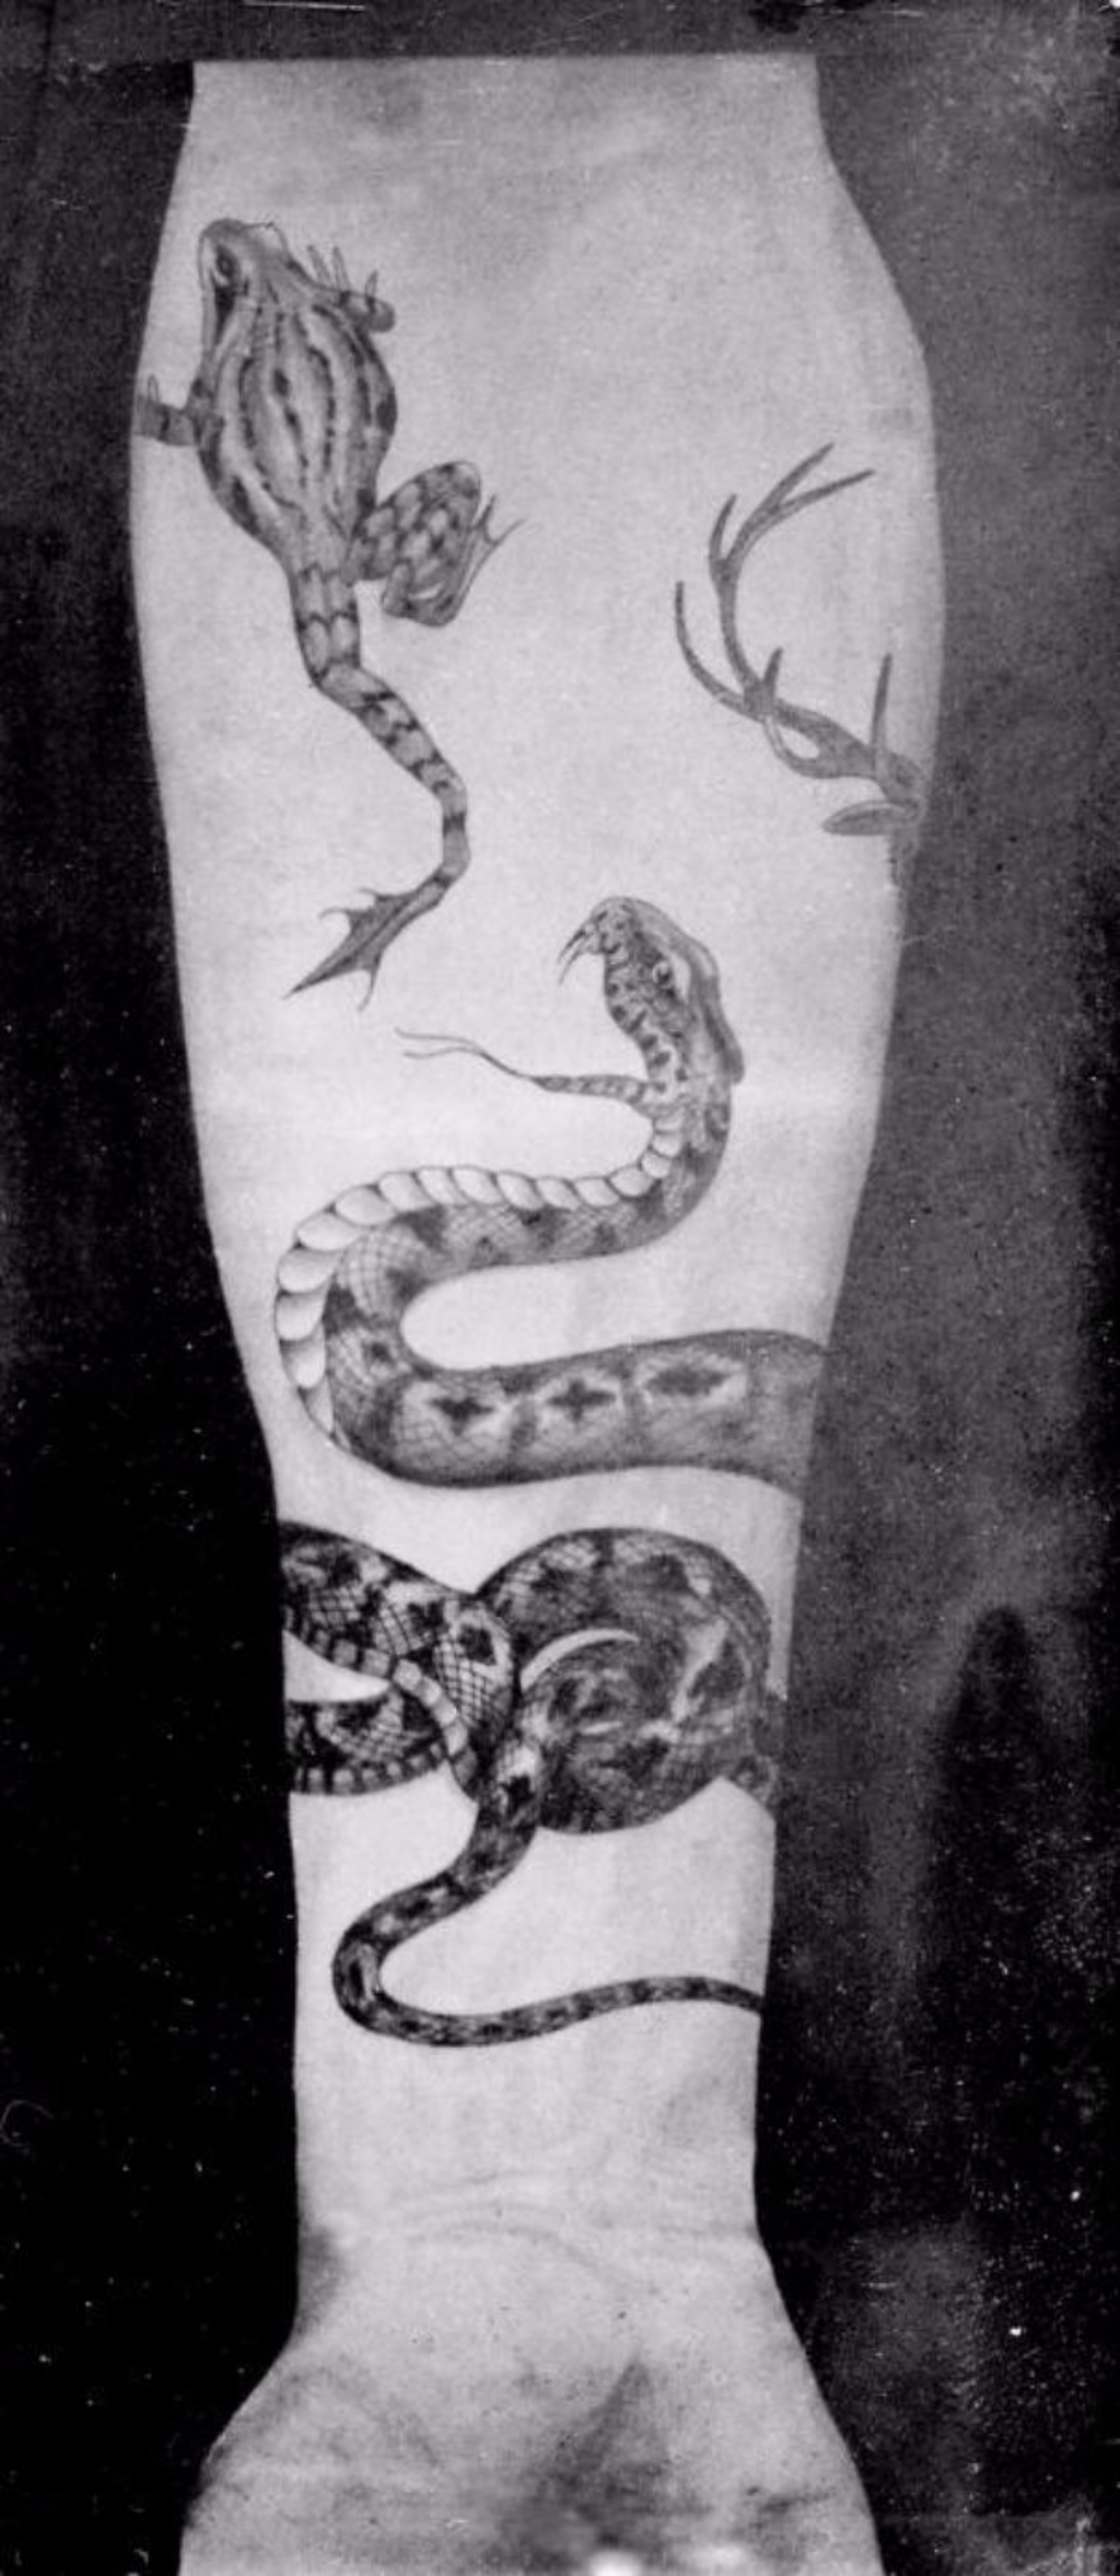 tattoos Sutherland Macdonald - tattoo artist geschiedenis